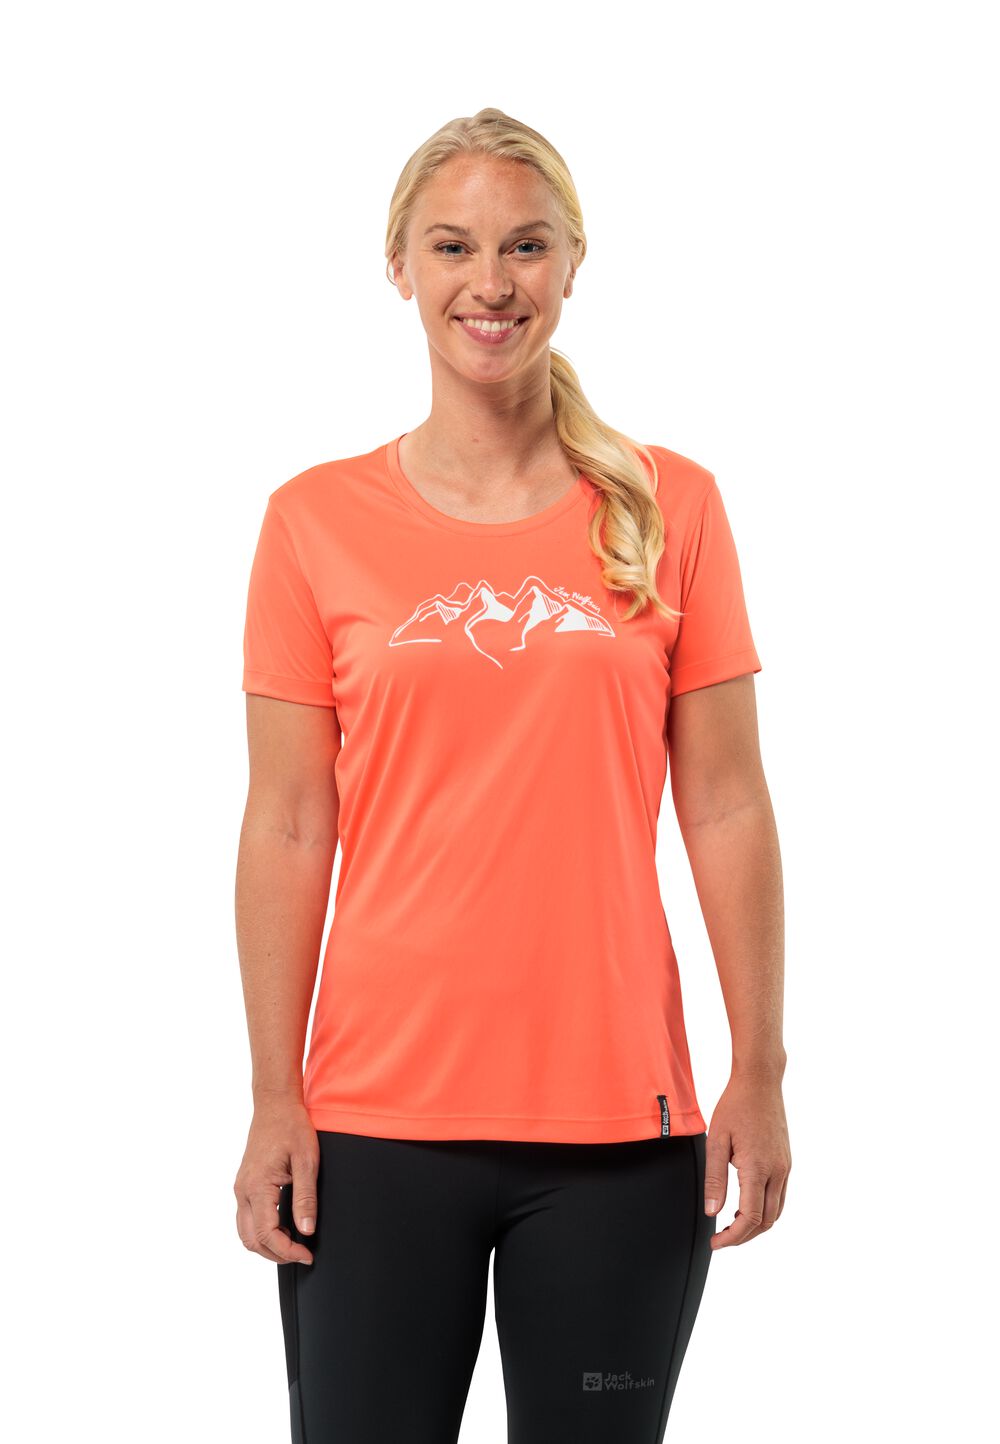 Jack Wolfskin Peak Graphic T-Shirt Women Functioneel shirt Dames M rood digital orange